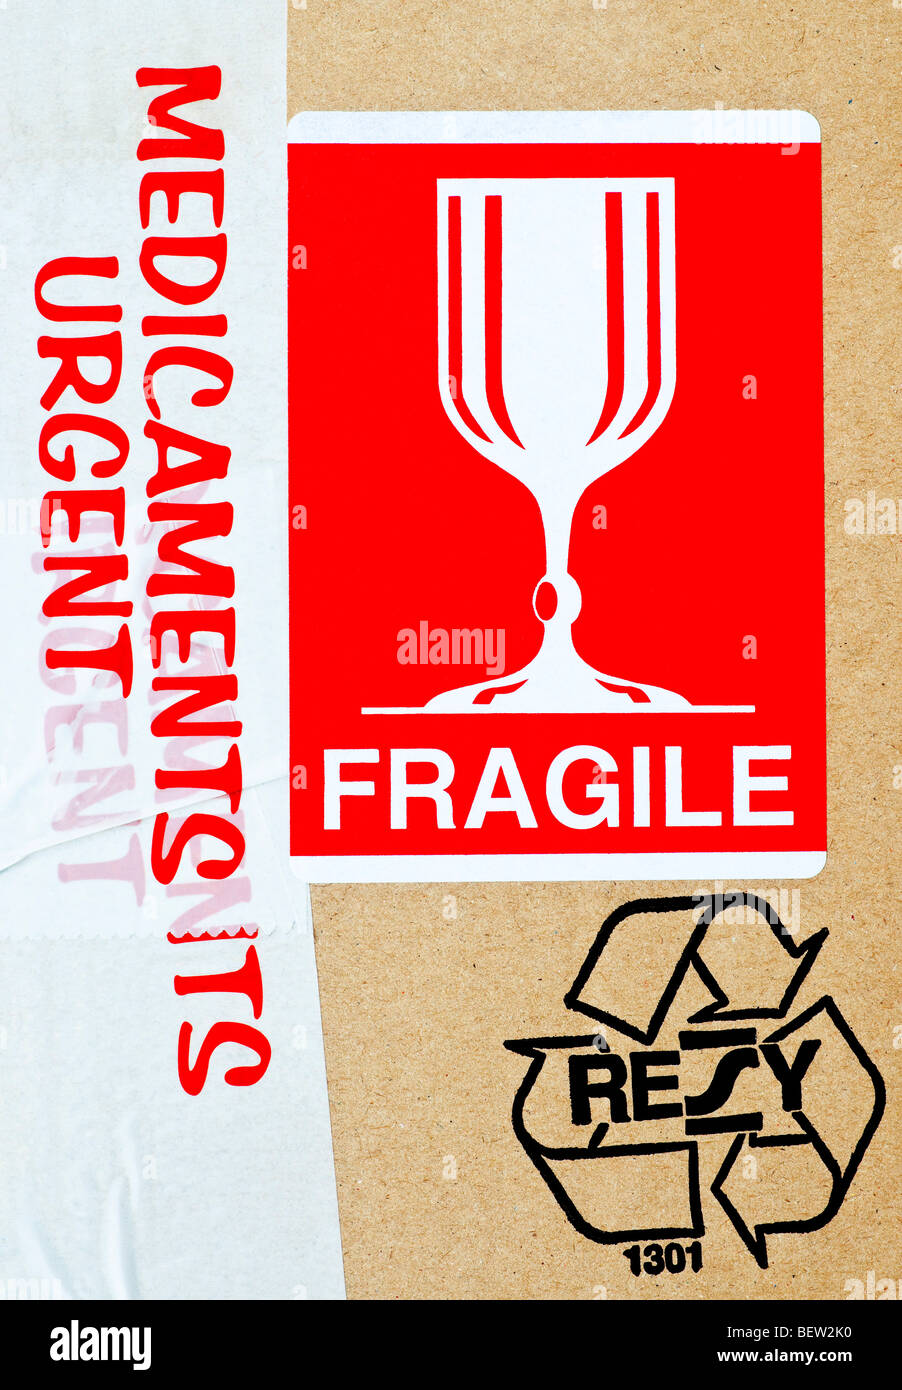 Fragile - Internationally recognized warning label information. Stock Photo